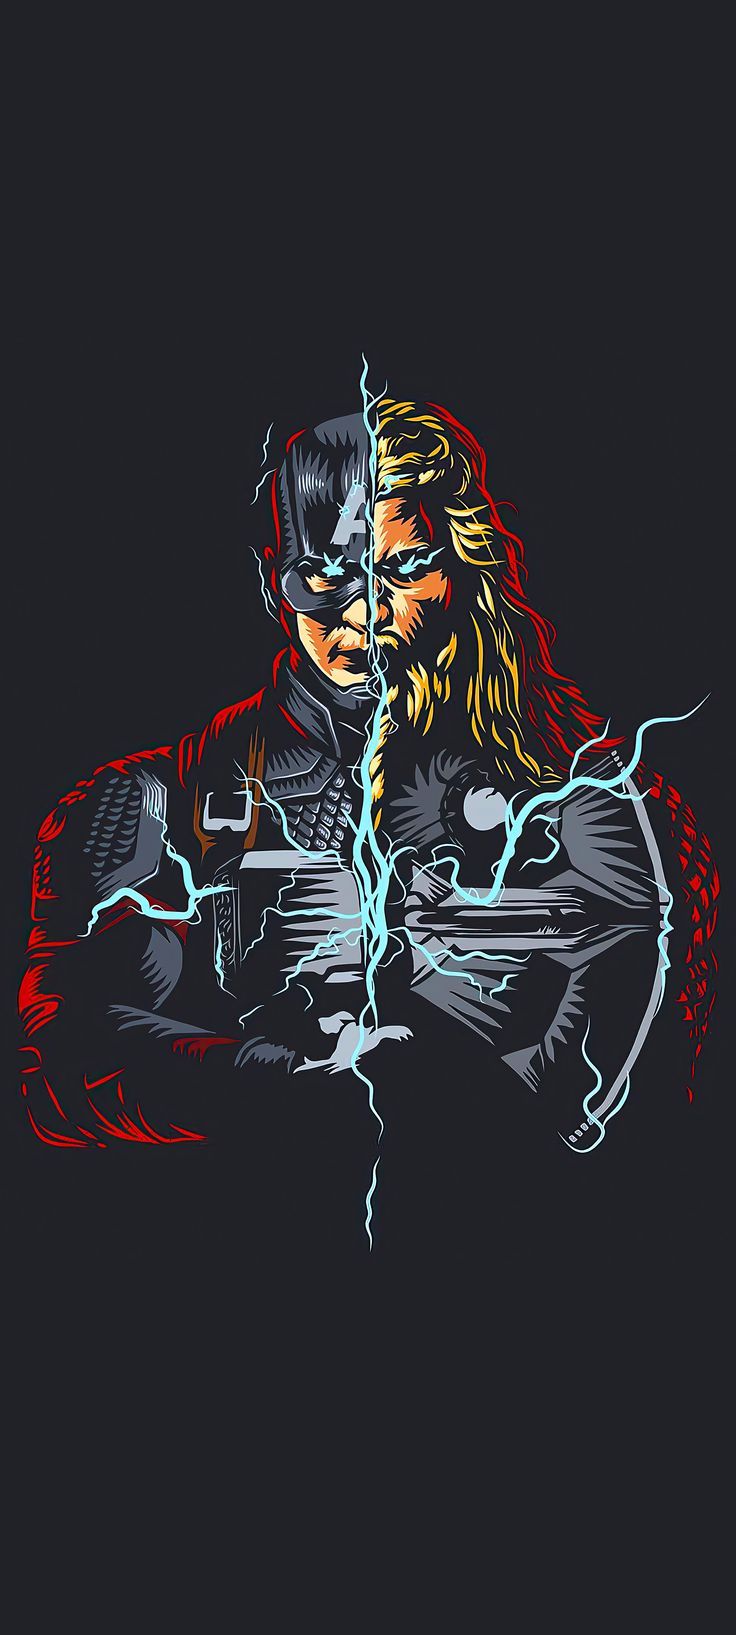 Thor Wallpaper. Thor wallpaper, Superhero artwork, Marvel comics wallpaper